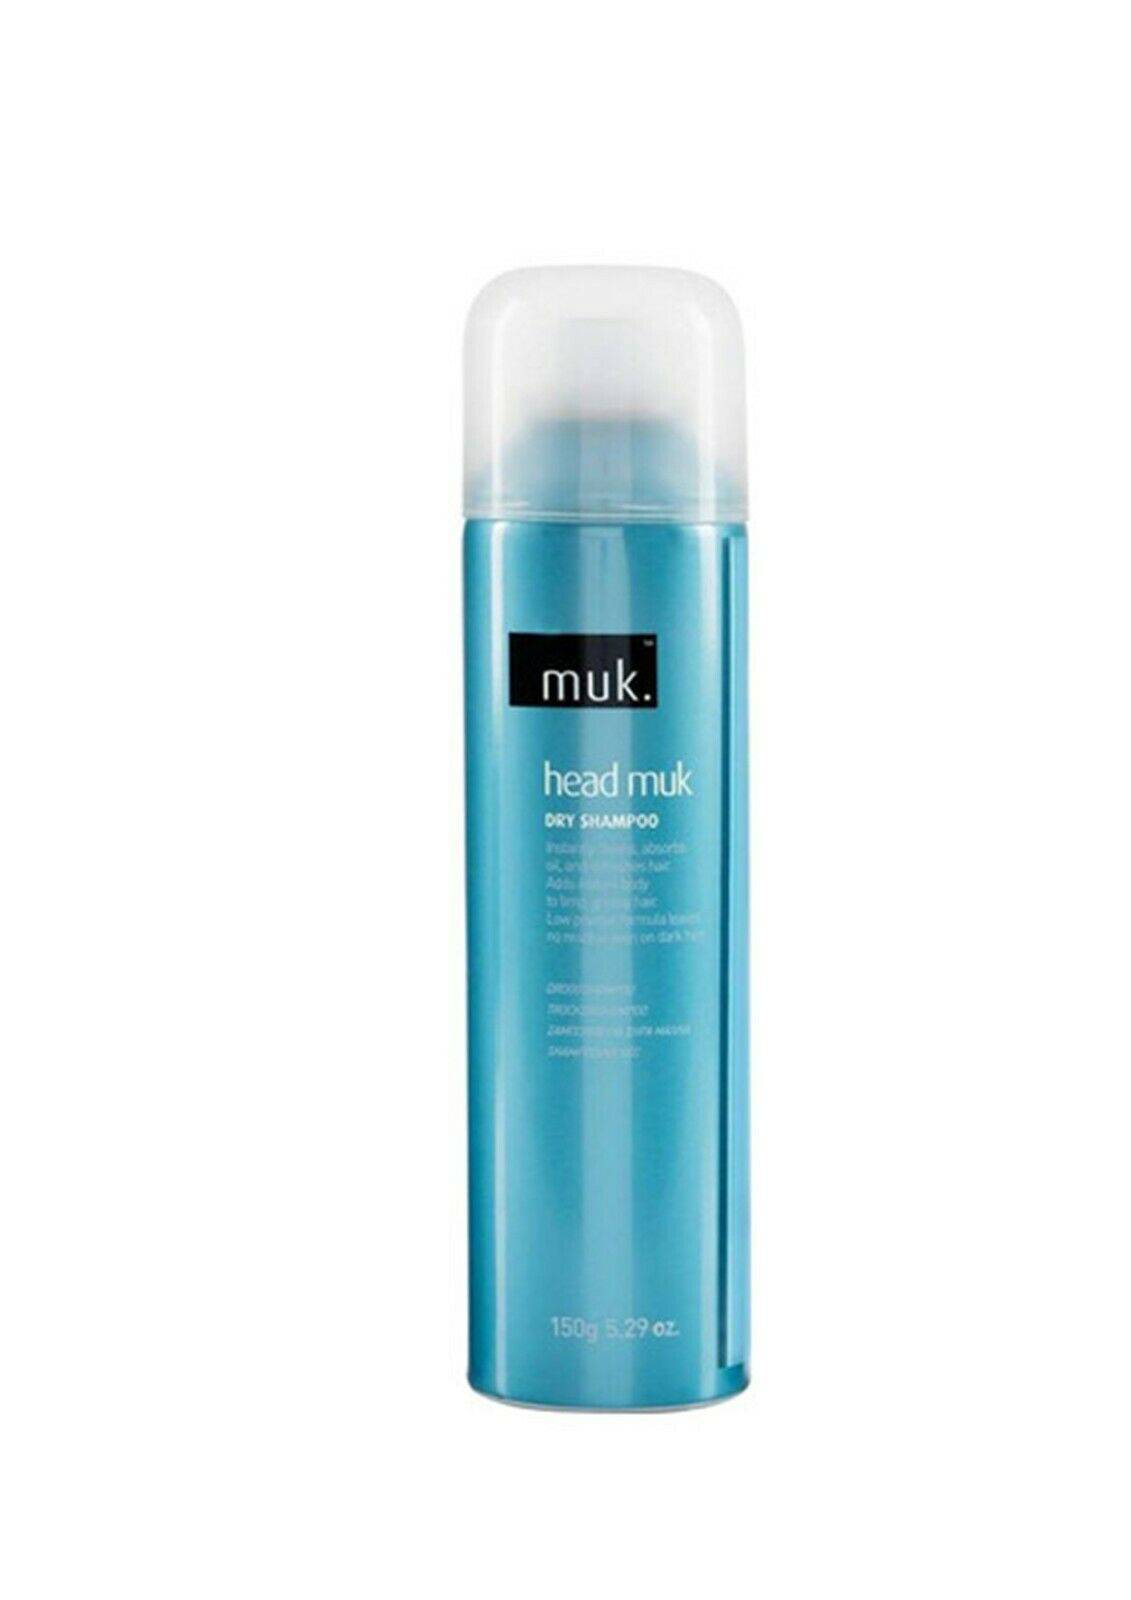 Muk Head Muk dry shampoo 150g - On Line Hair Depot